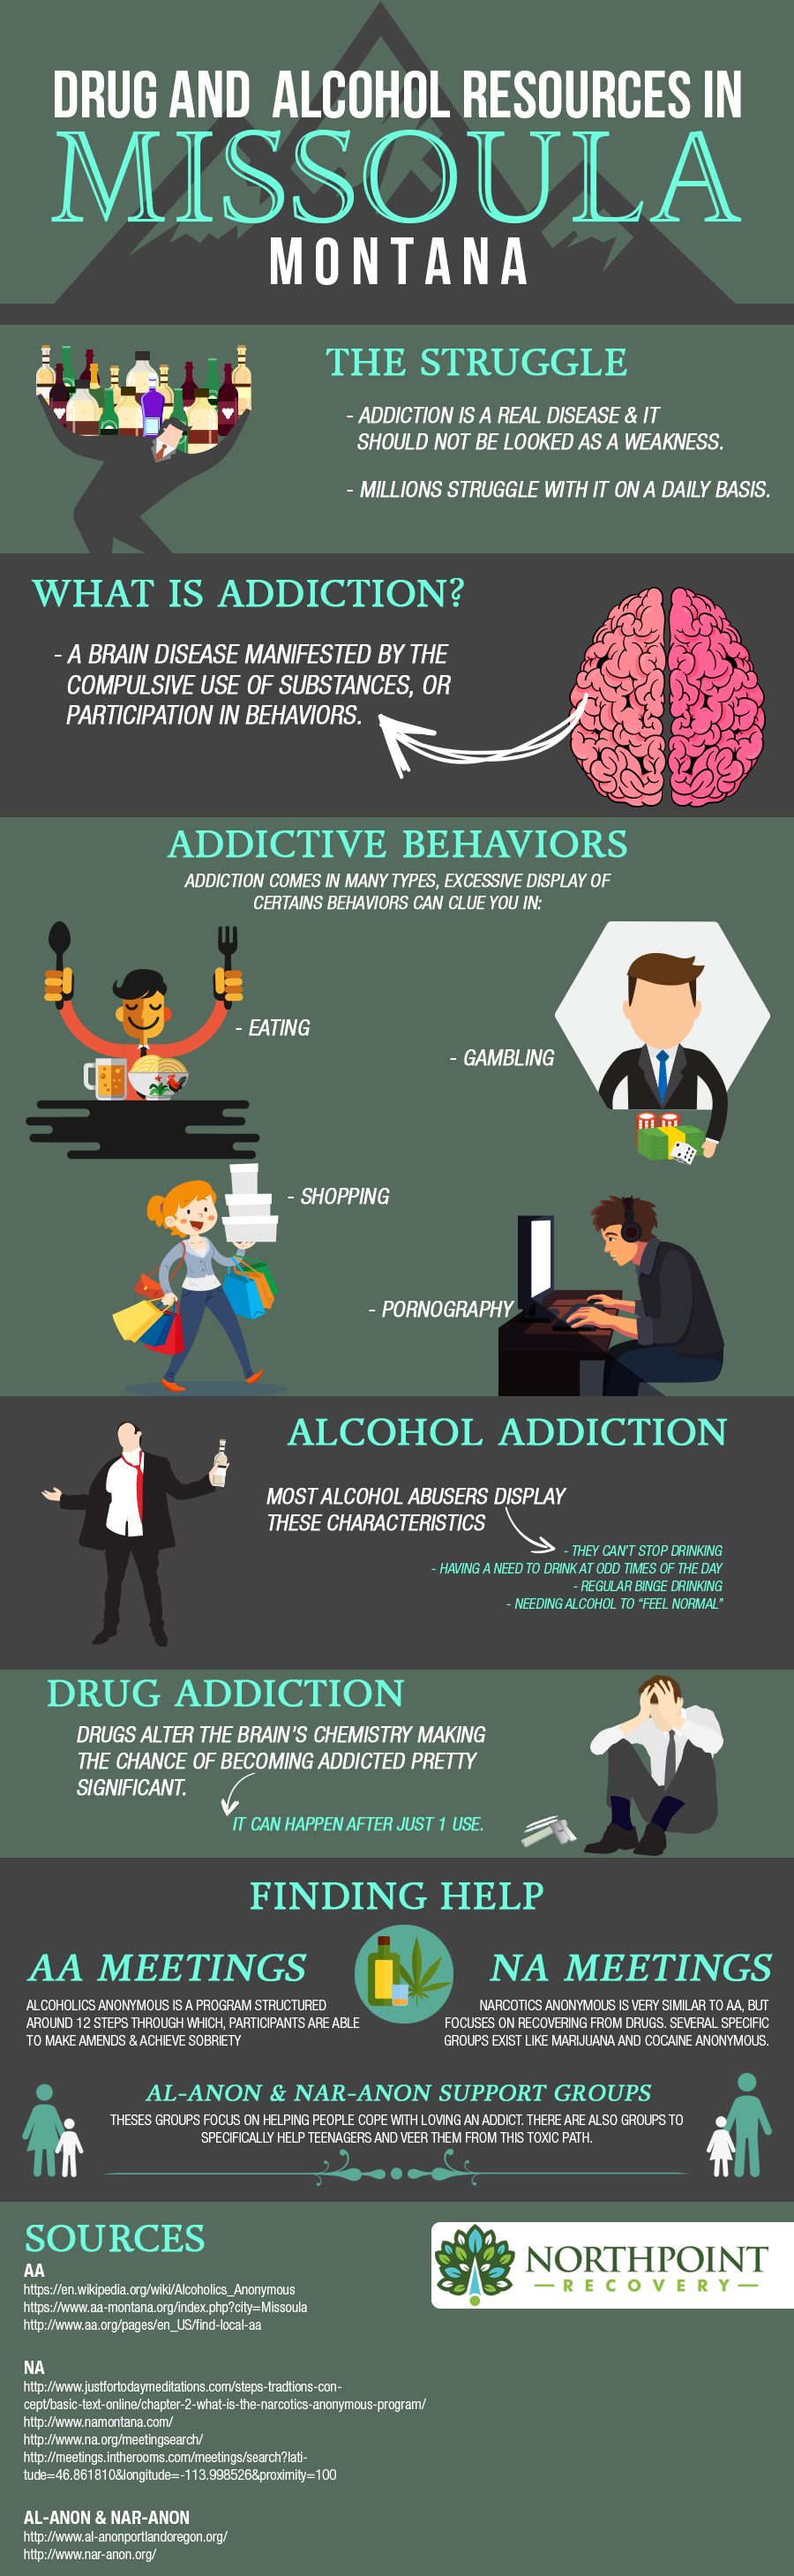 Missoula Addiction Resources